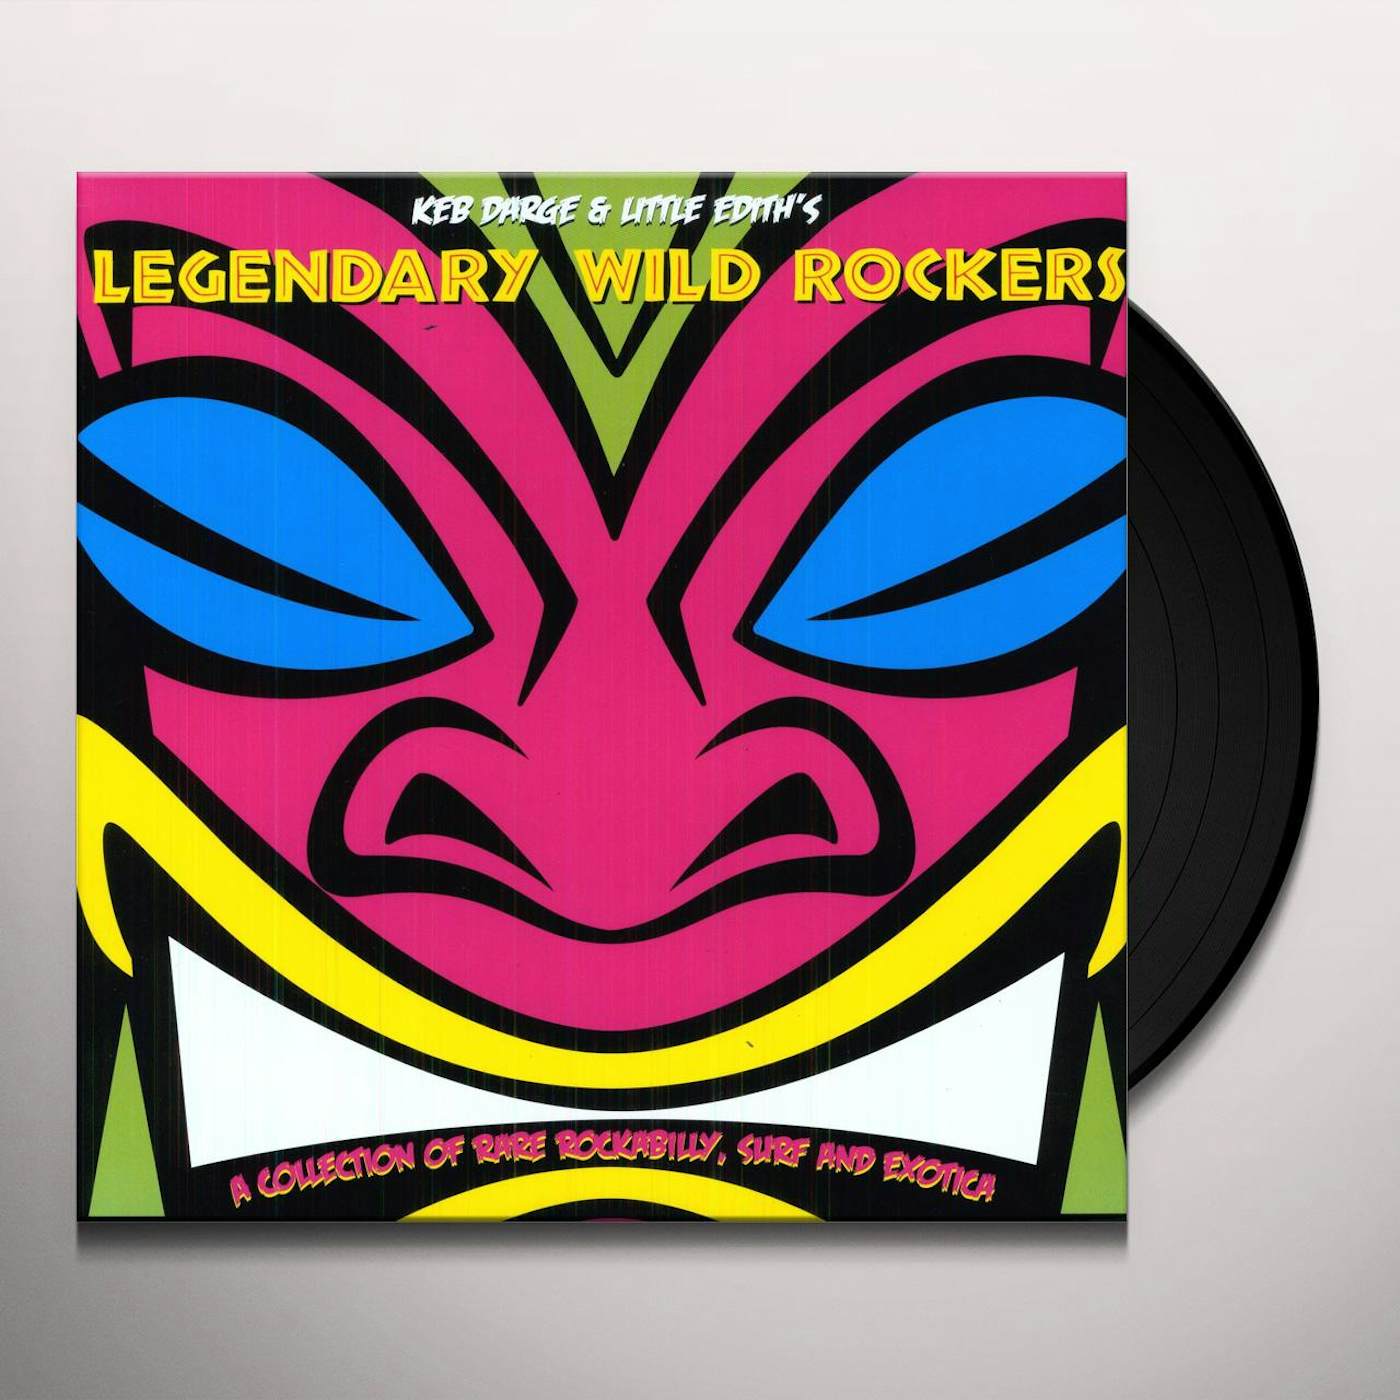 Keb Darge & Little Ediths LEGENDARY WILD ROCKERS (Vinyl)